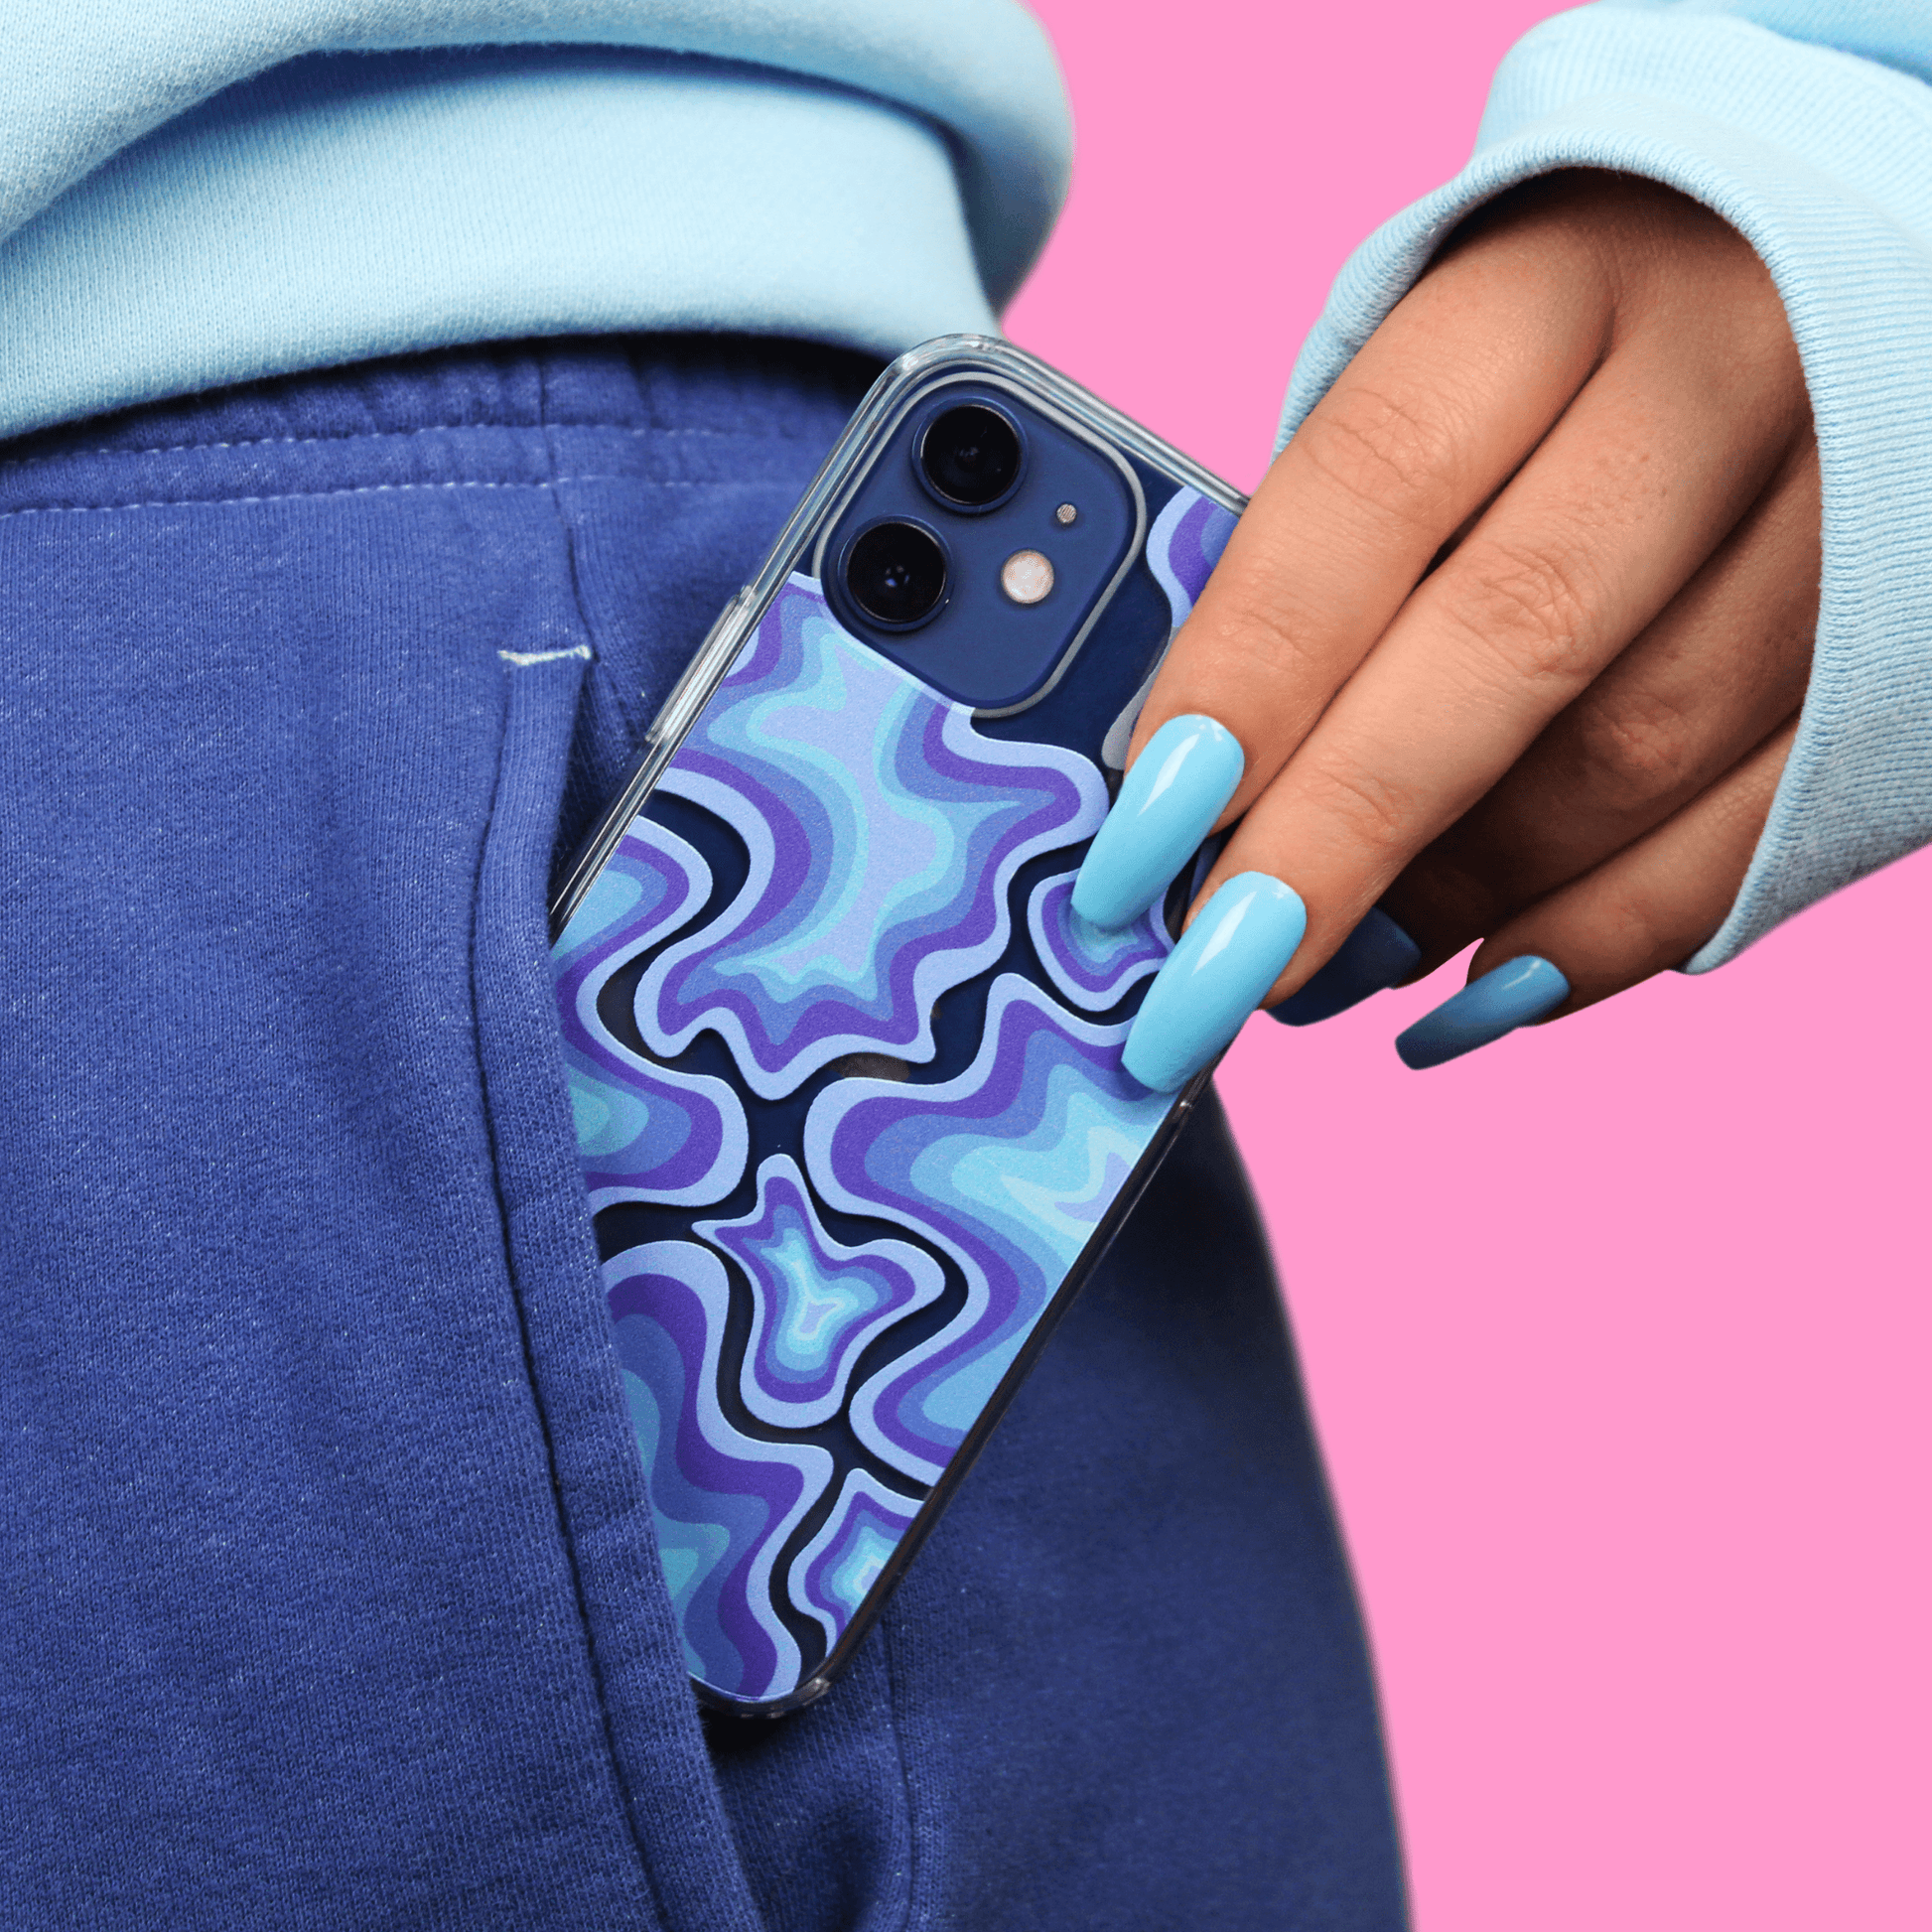 blueberry ripple iphone case, blue case, blue phone case, blue swirls iphone case